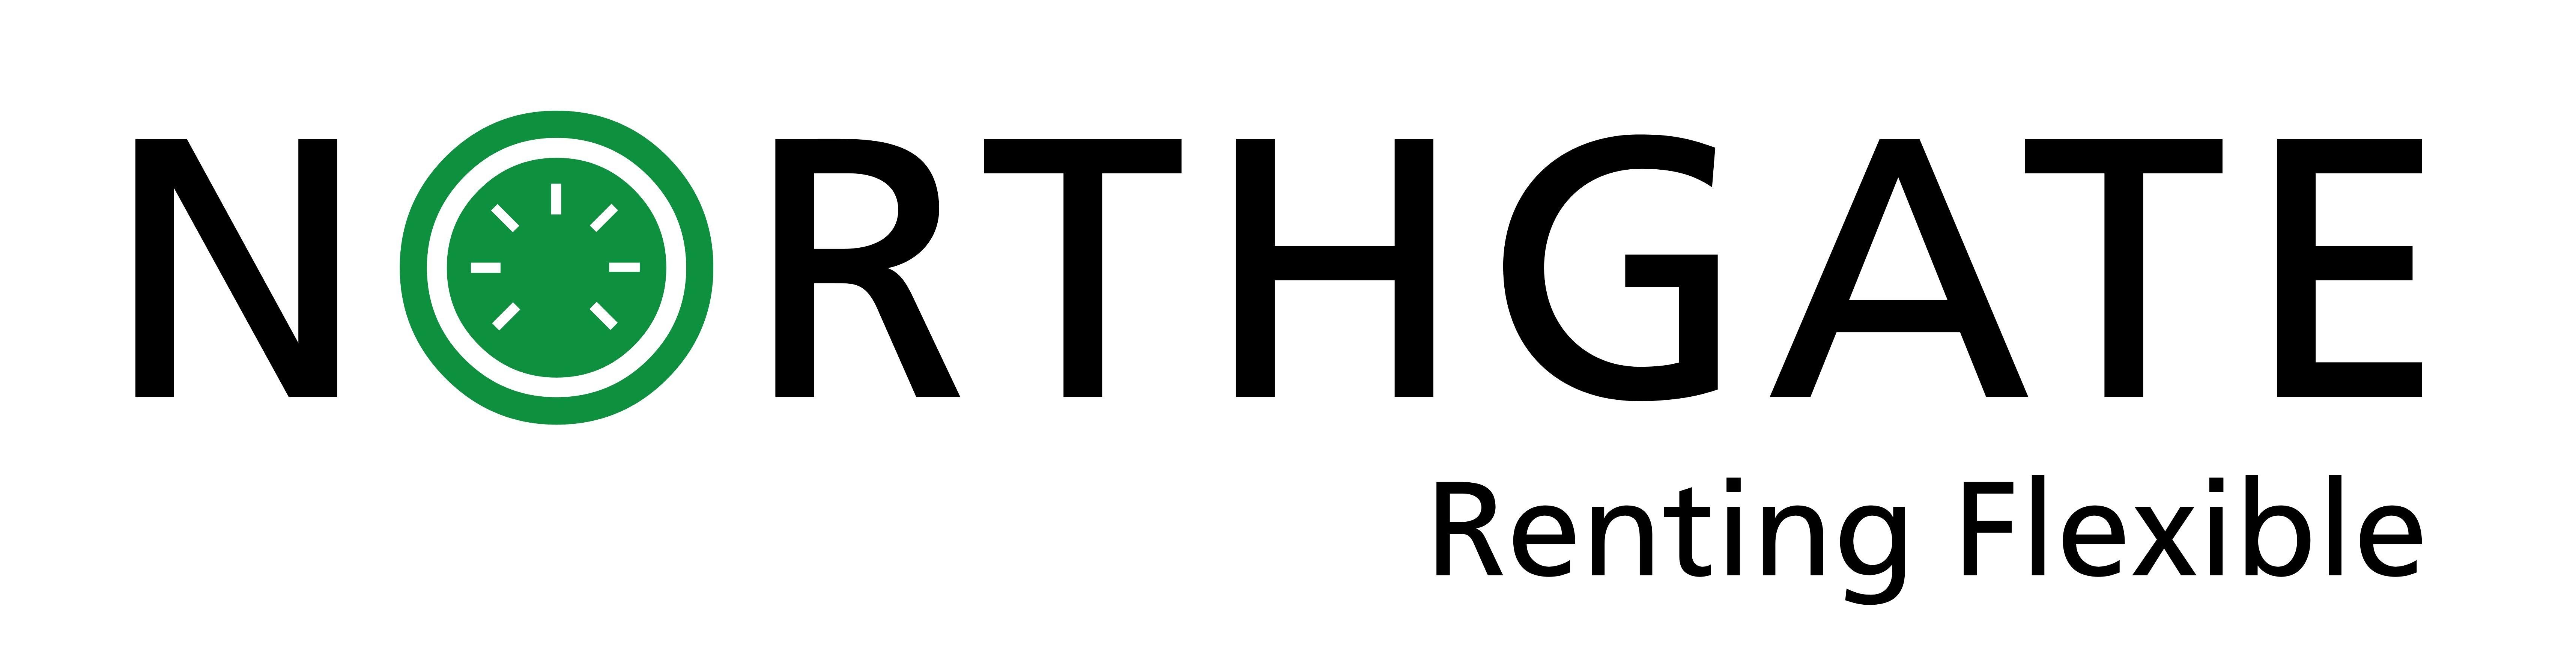 Northgate Logo - Northgate